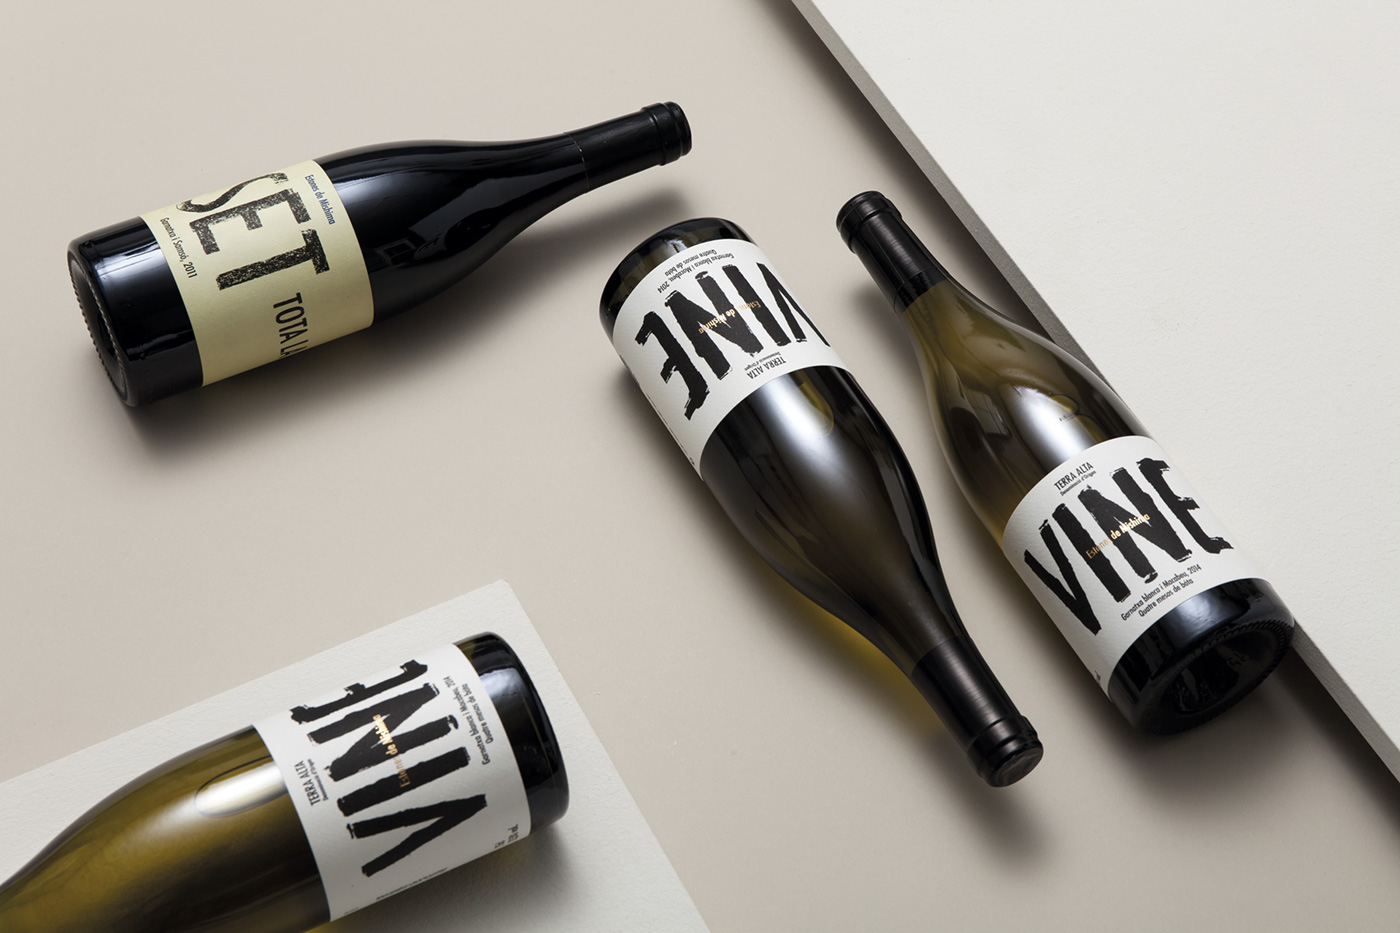 mishima folchstudio wine Labeldesign